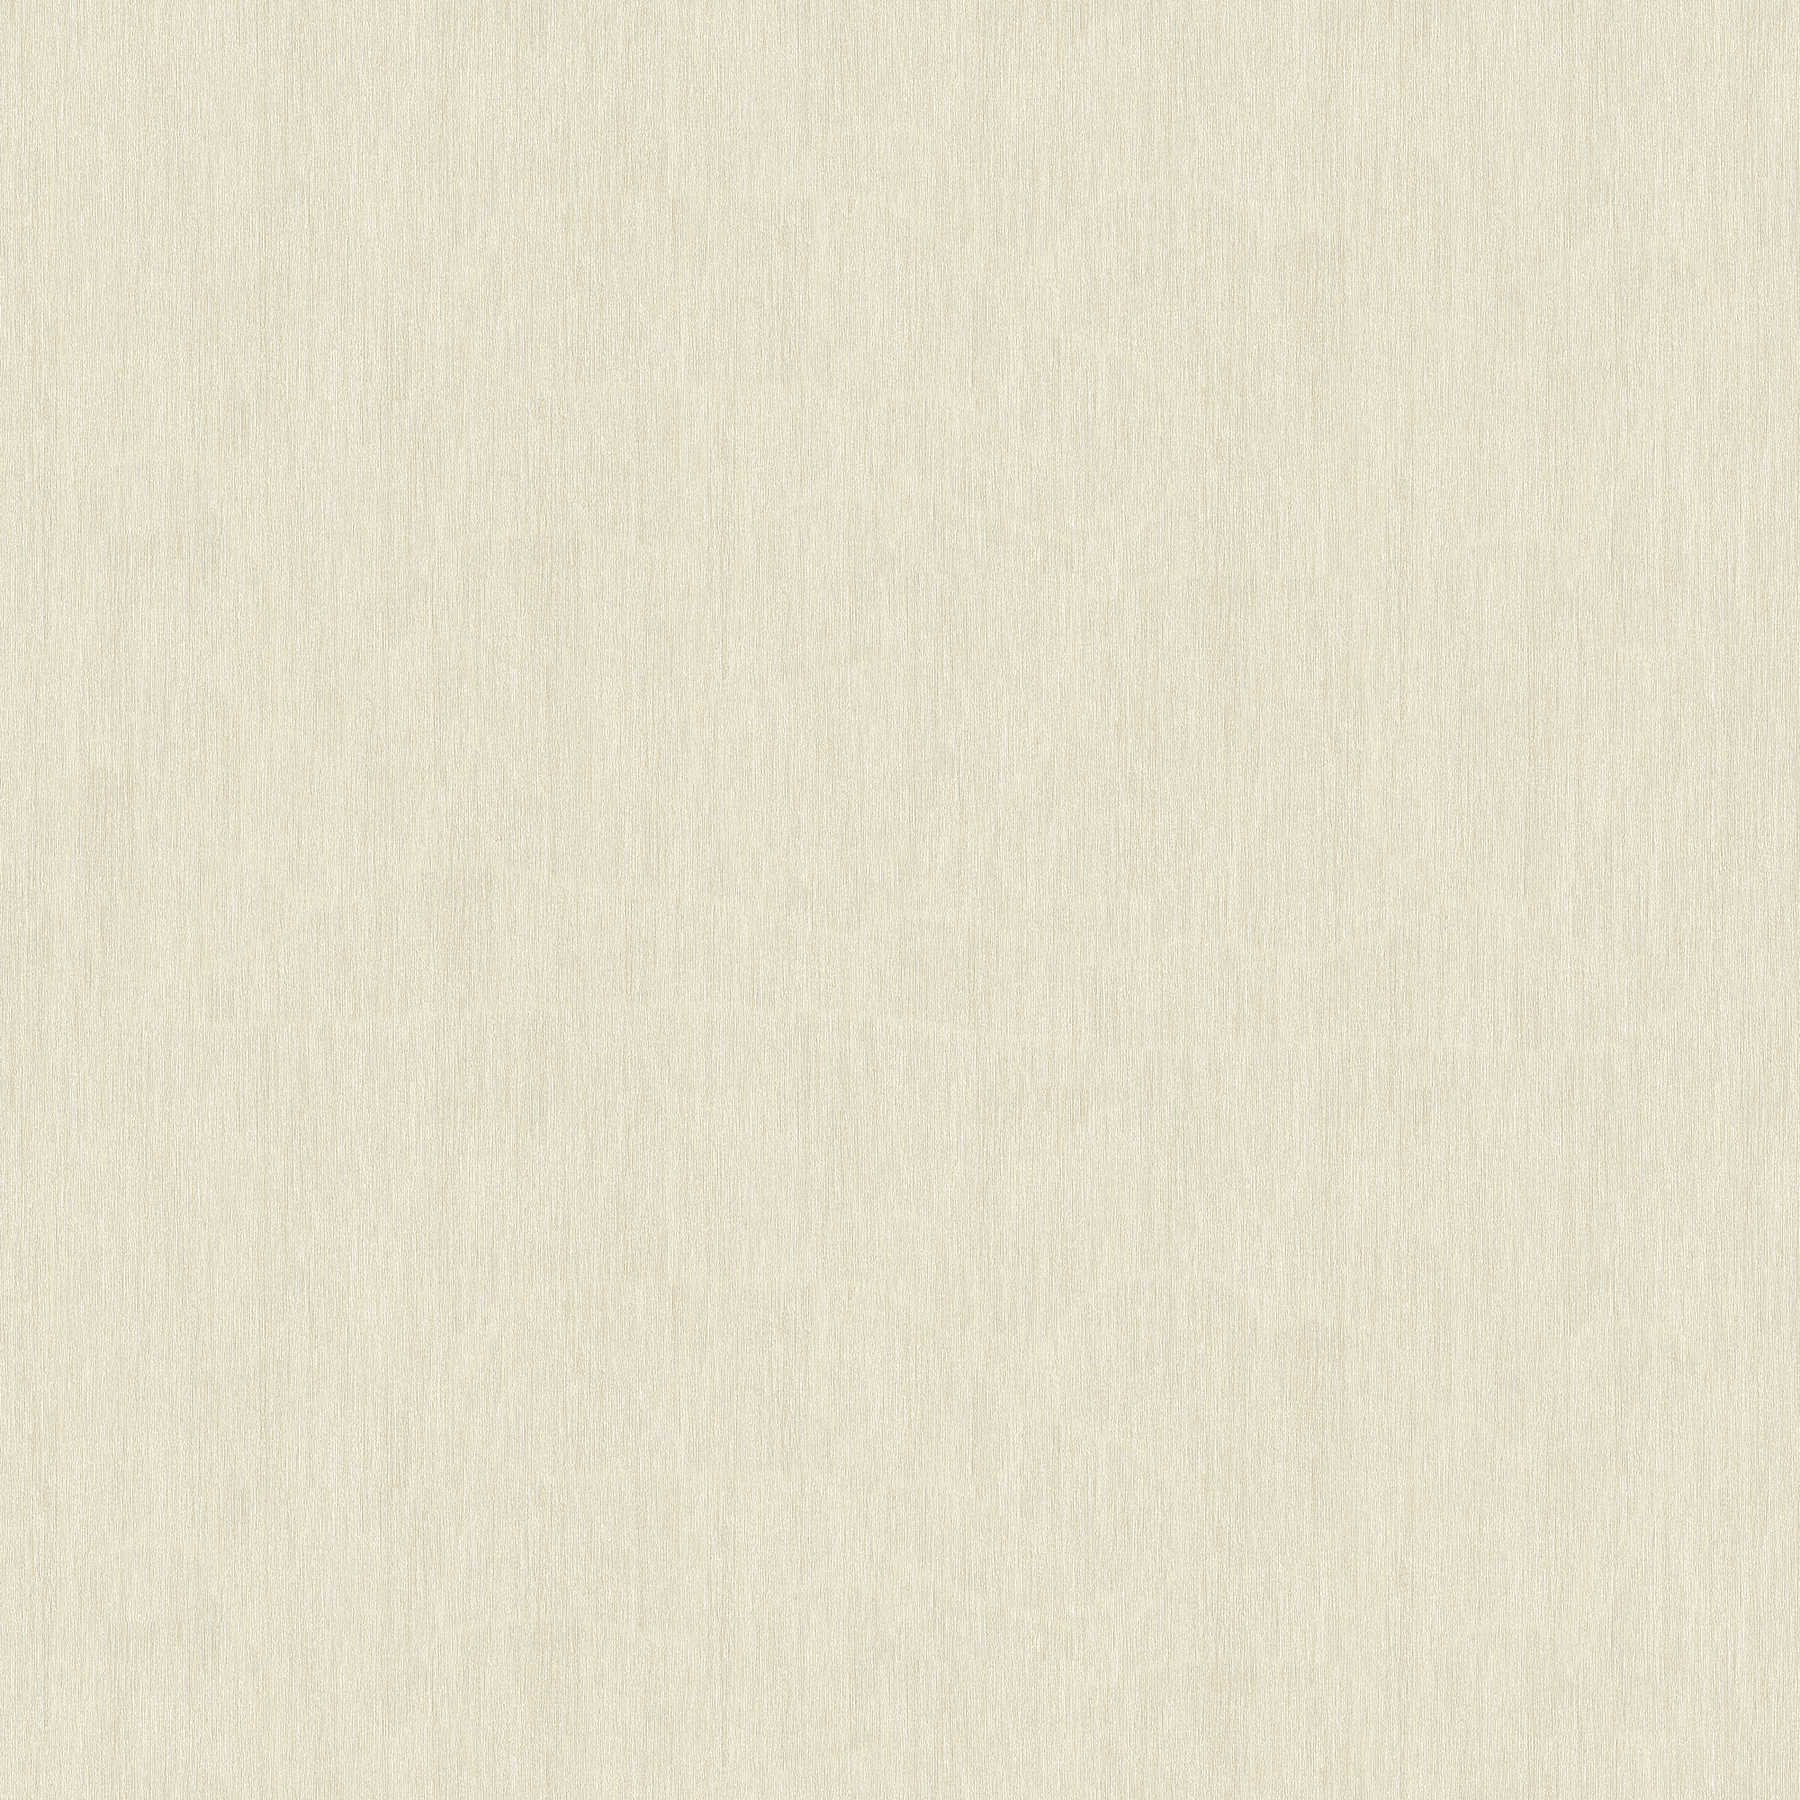         Non-woven wallpaper light beige with mottled colour effect
    